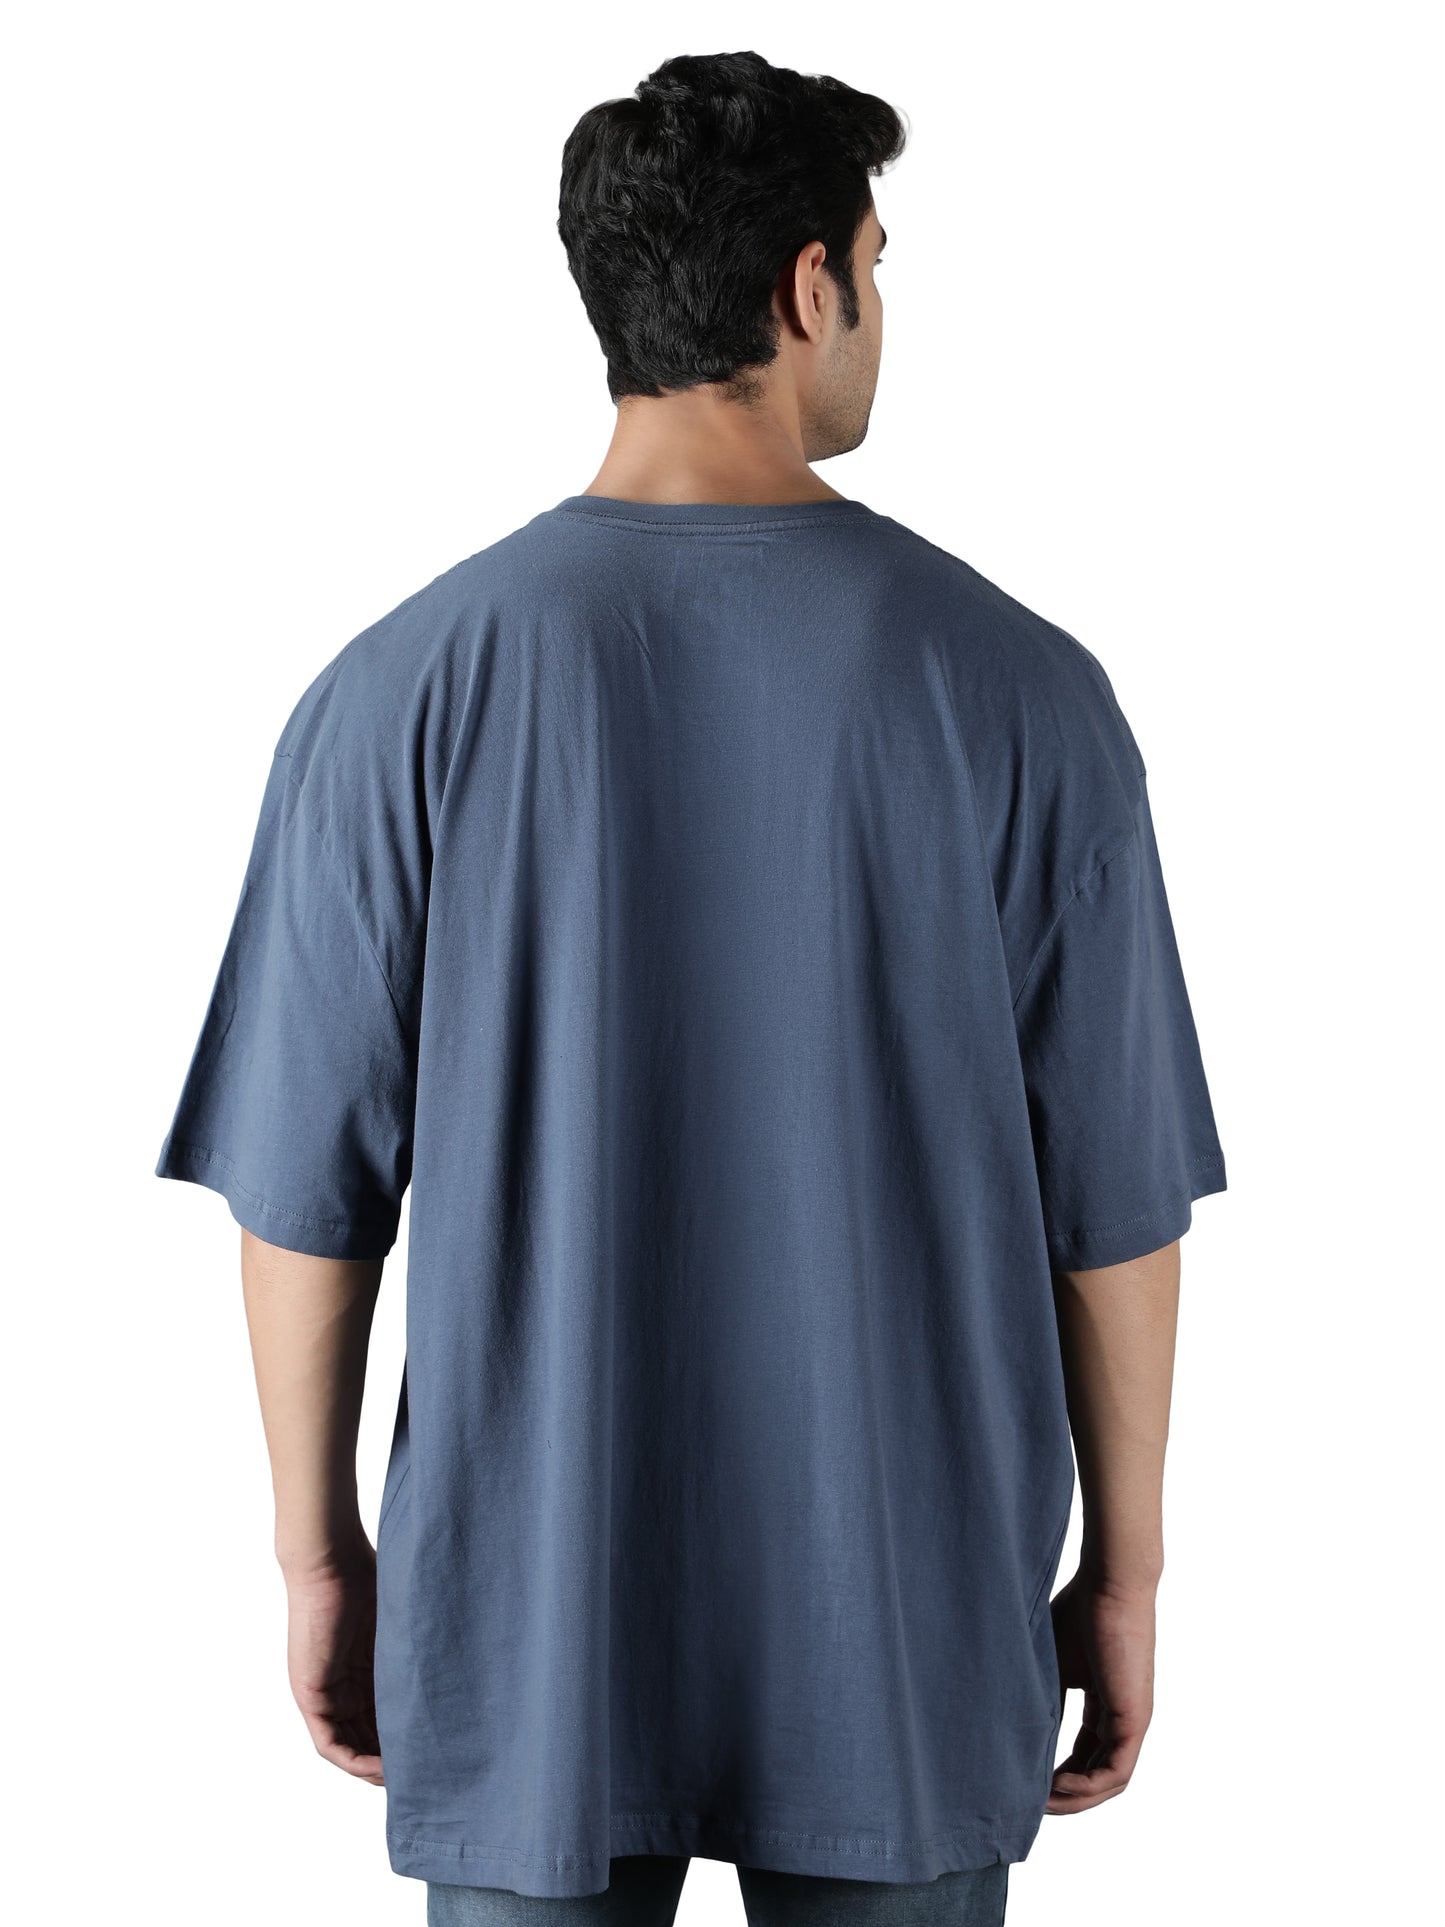 NUEVOSPORTA Men's Cotton Lion Printed Blue T-Shirt